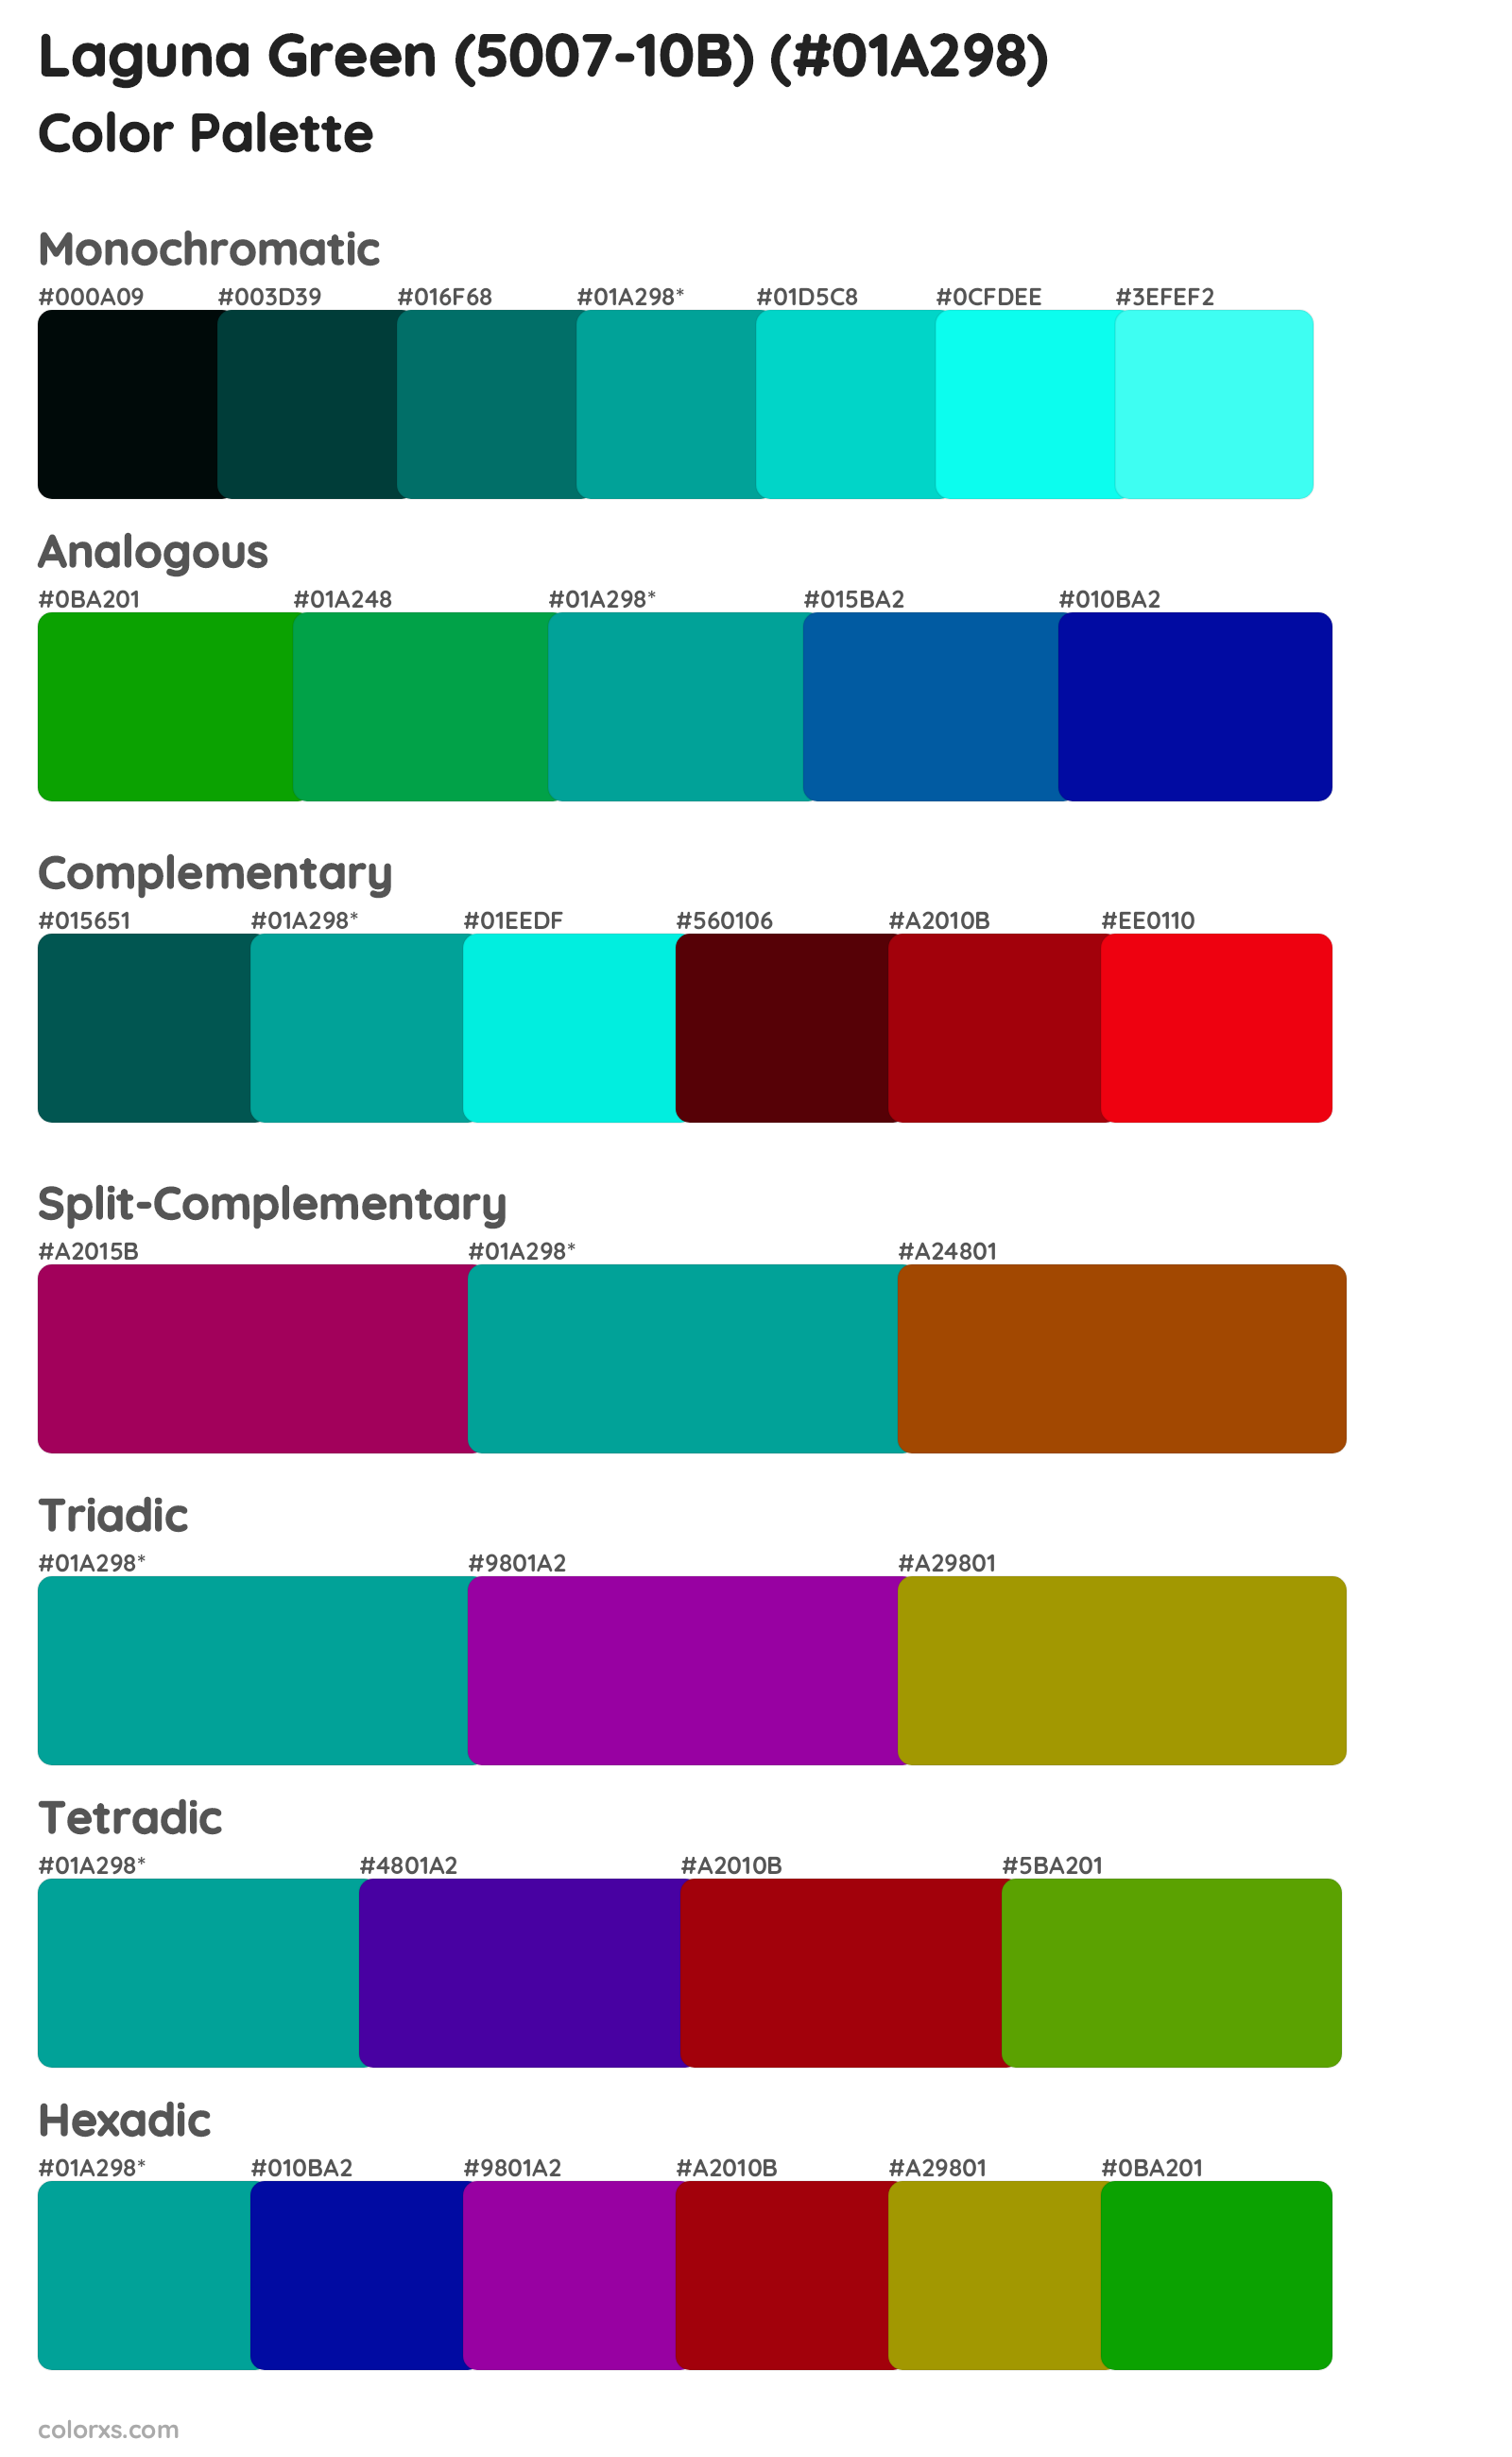 Laguna Green (5007-10B) Color Scheme Palettes